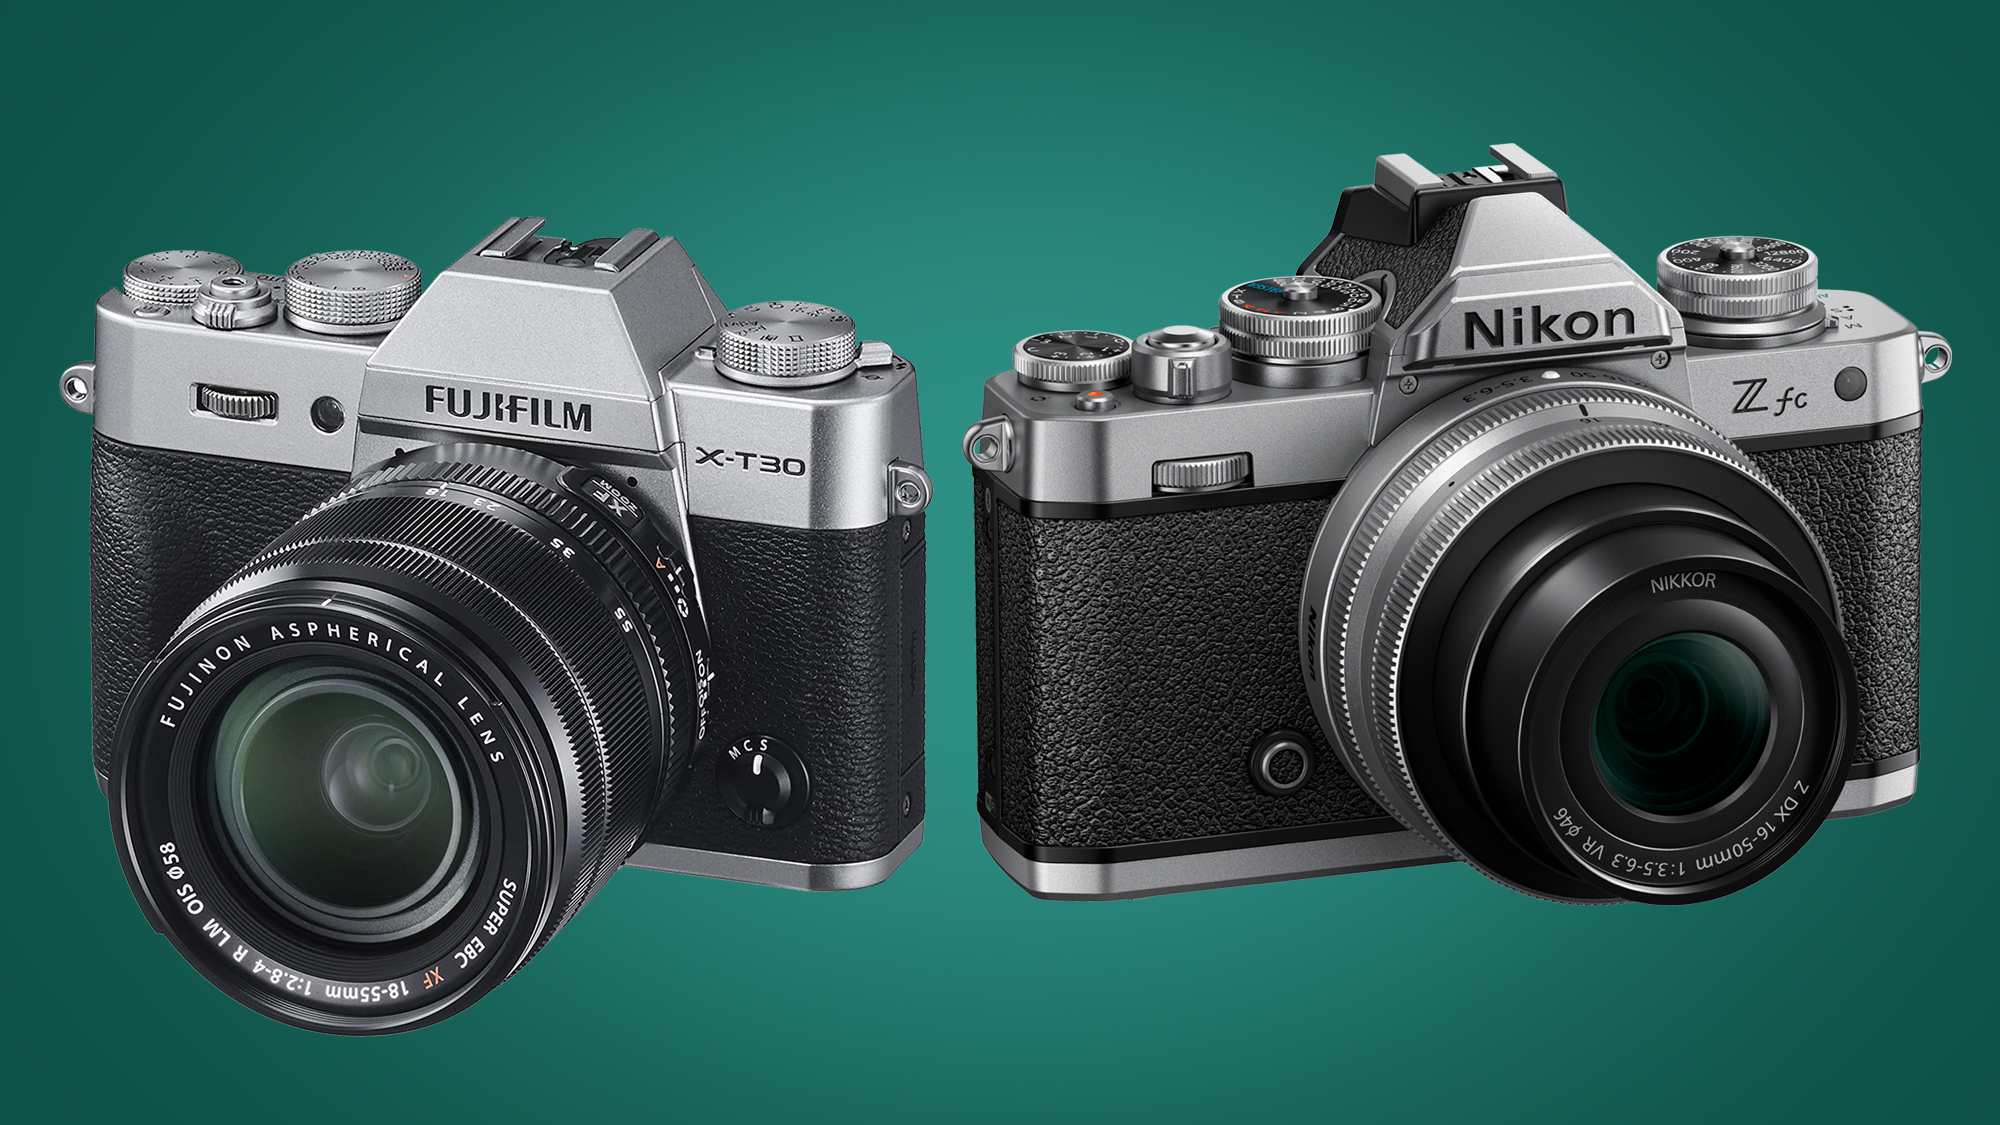 Image showing Fujifilm X-T30 next to Nikon Zfc